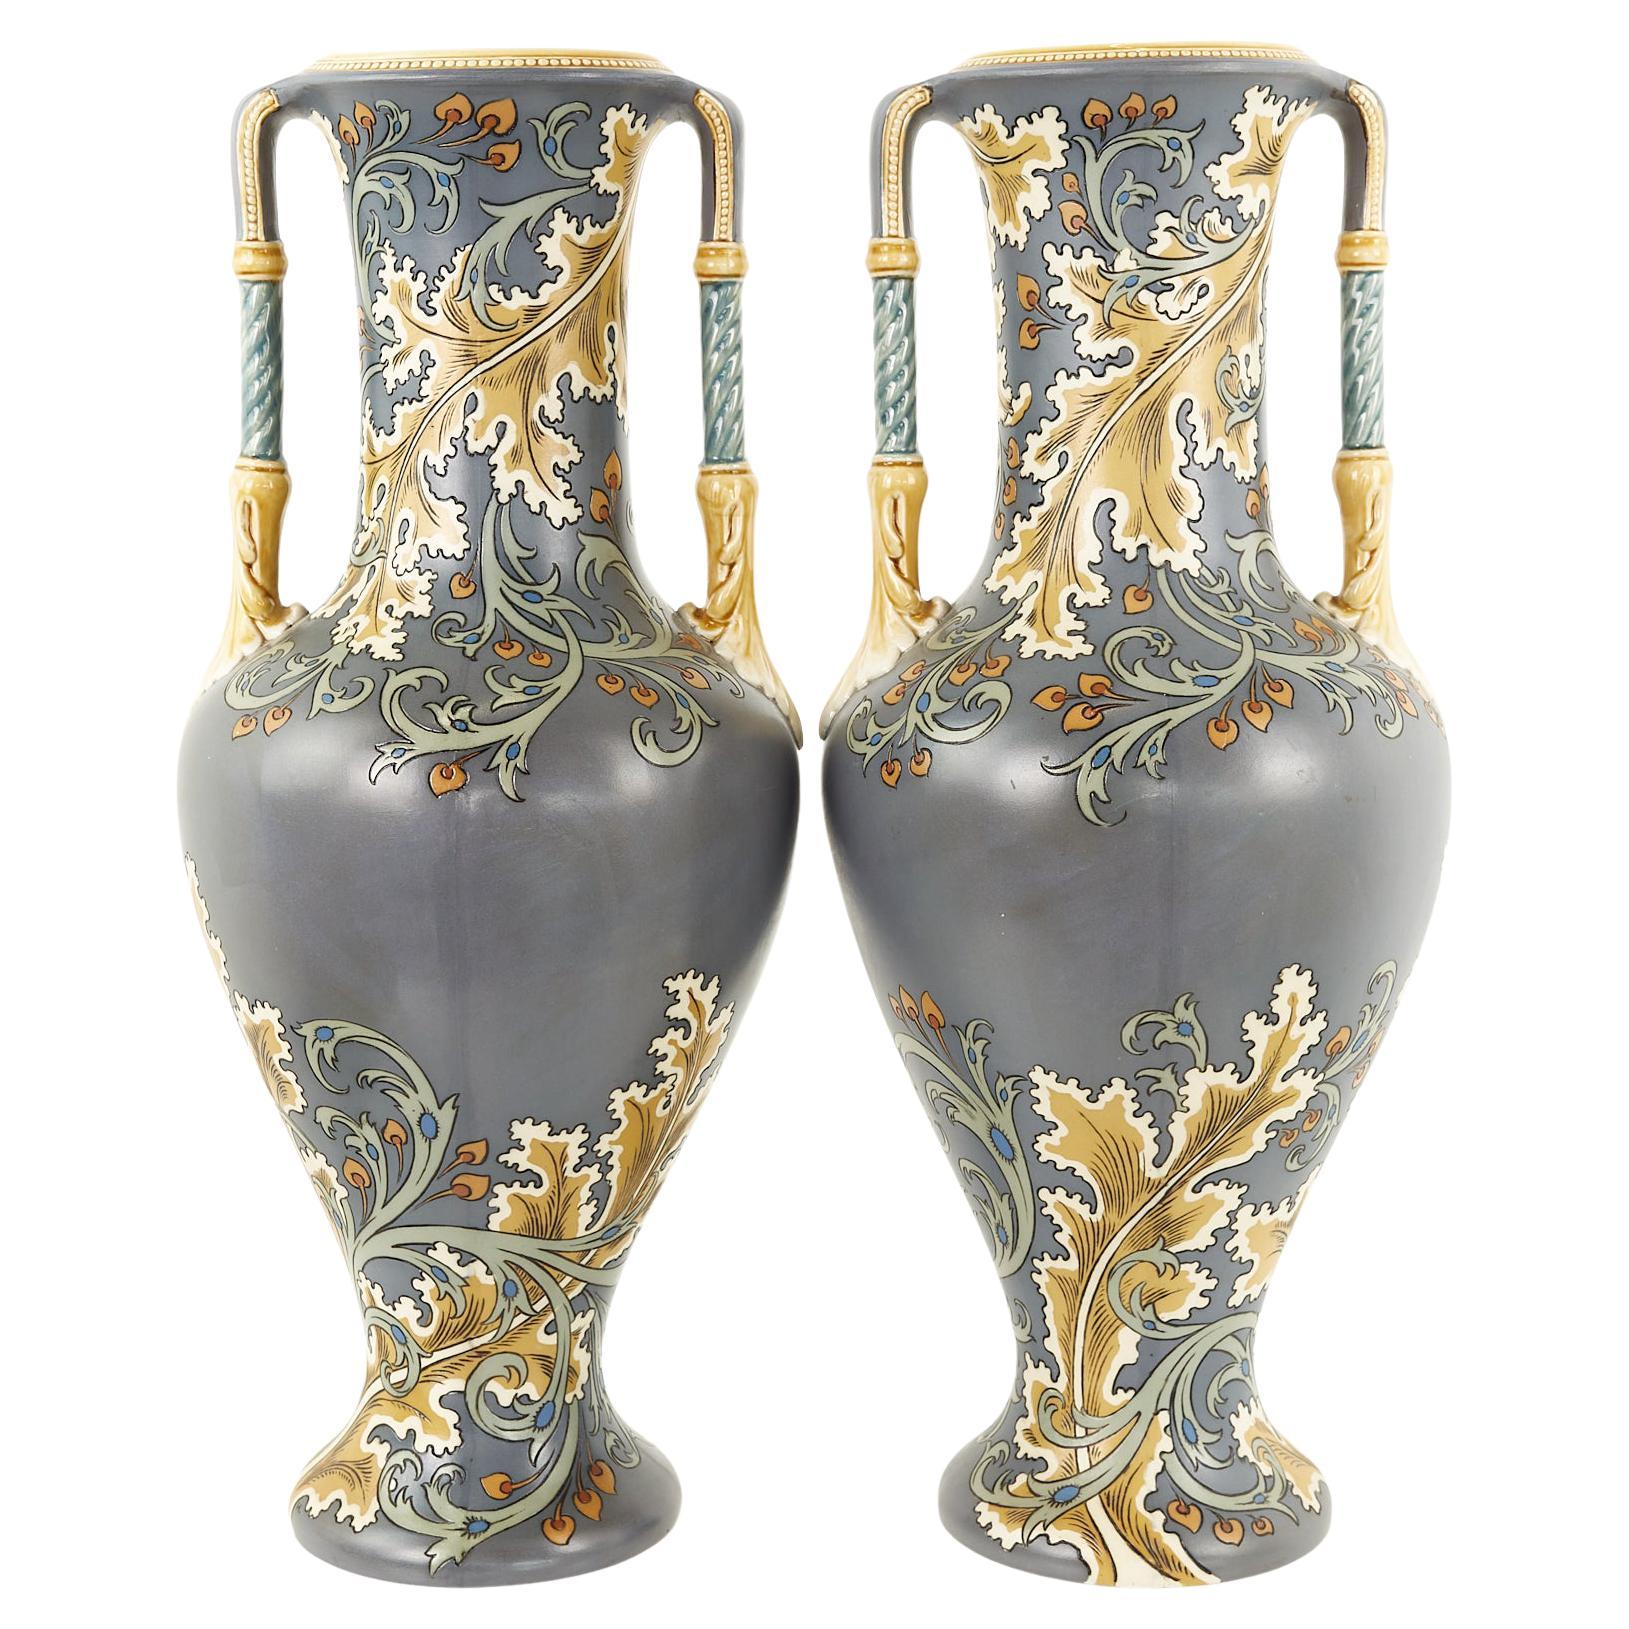 Floral Art Nouveau Vase by Mettlach, Later Villeroy & Boch, a Pair For Sale